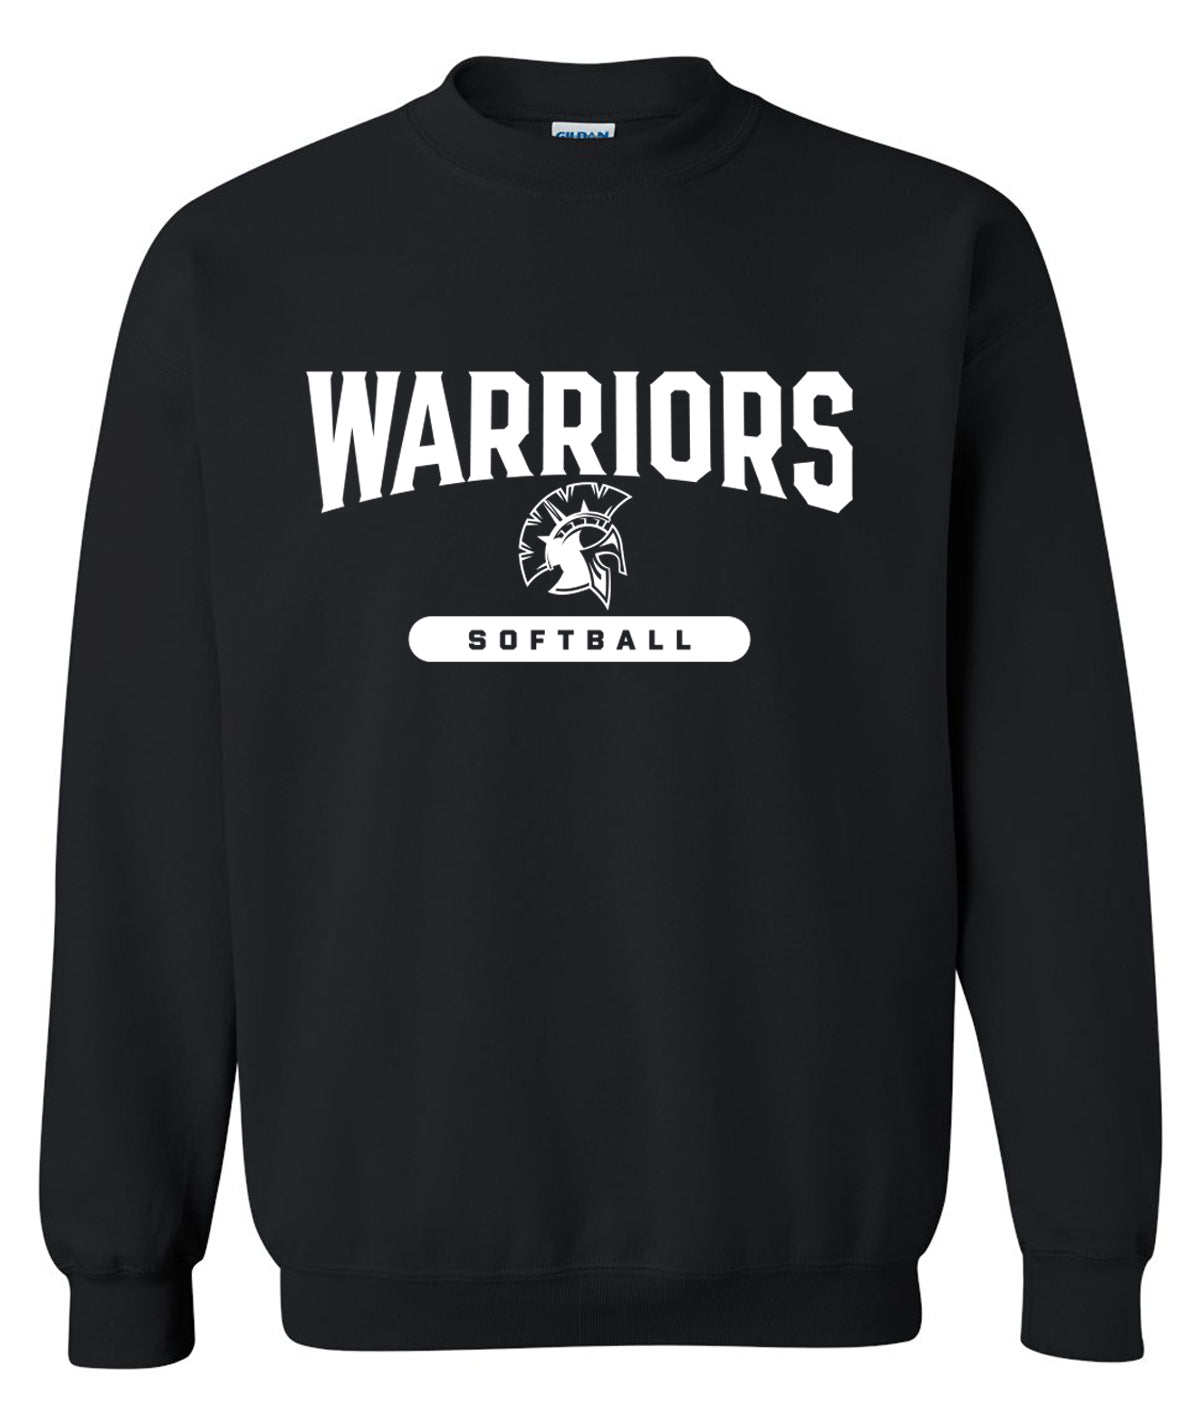 Warriors Softball Crewneck Sweatshirt